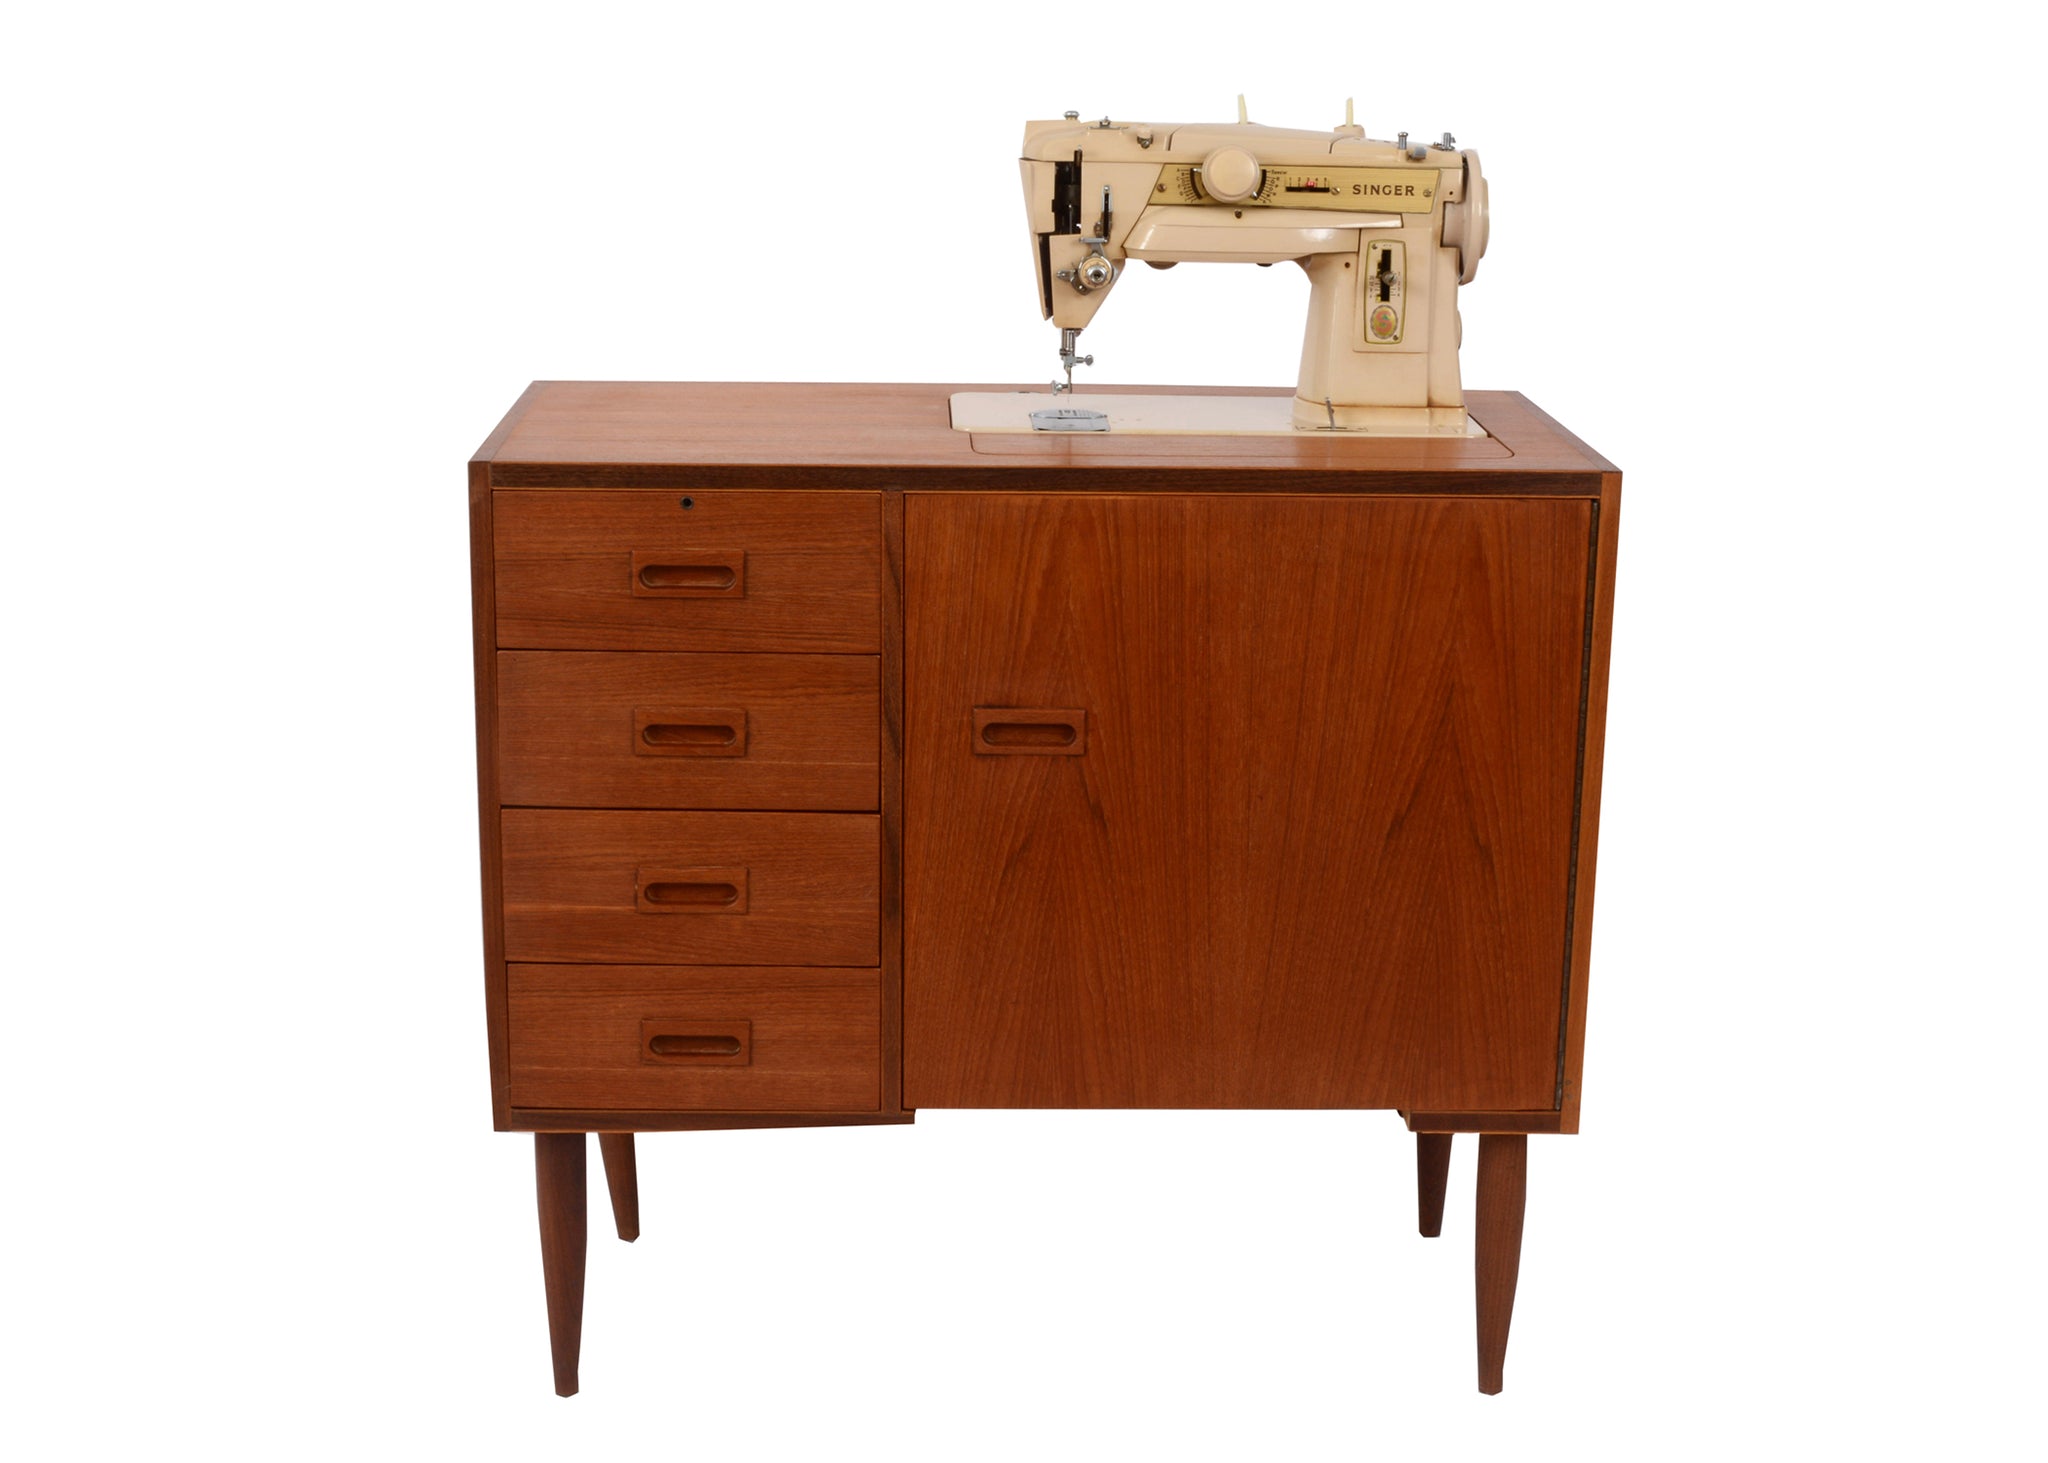 Singer sewing Machine mid century sideboard retro teak g plan ireland